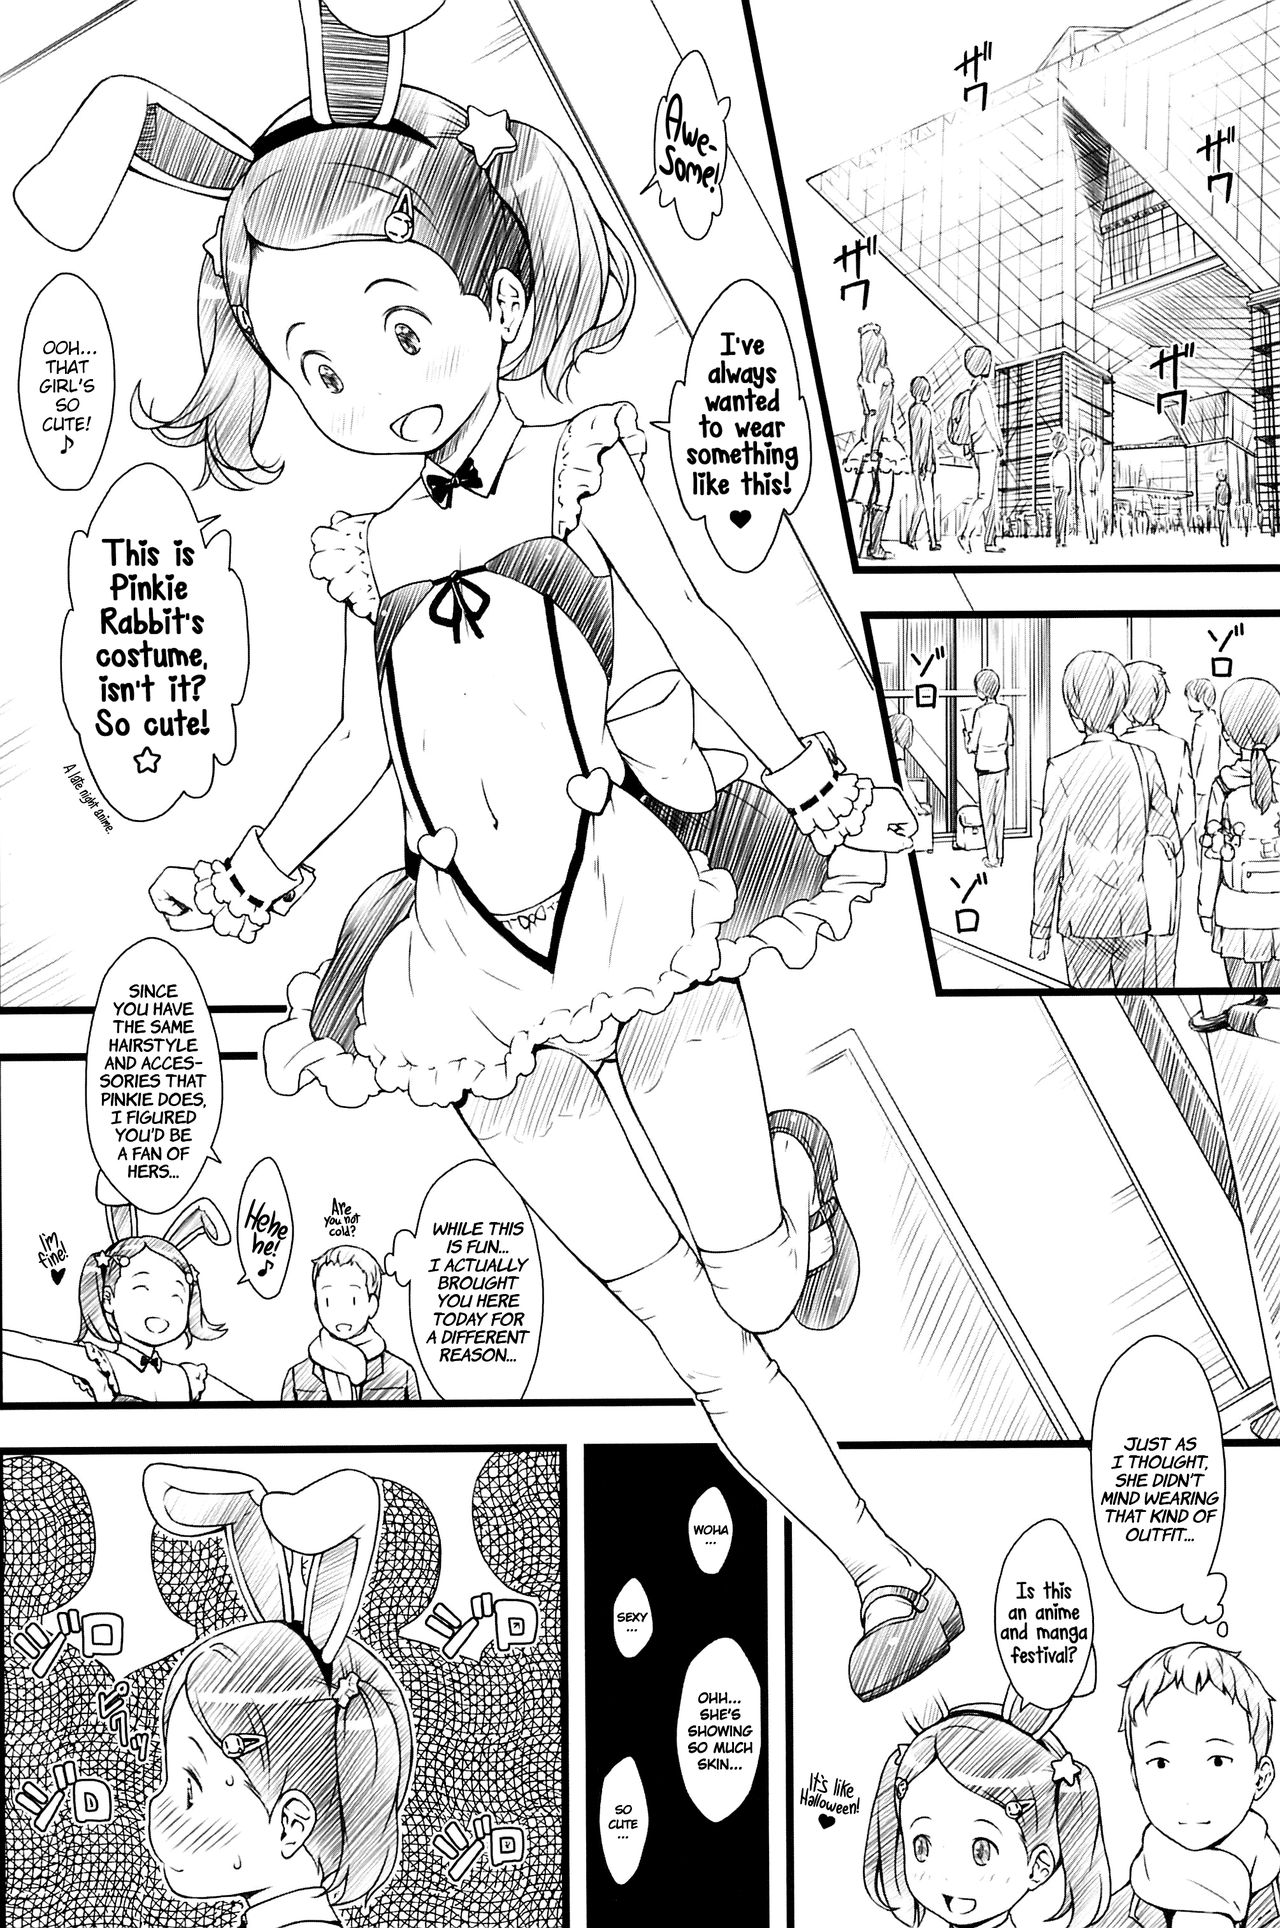 Read C Akatama Sakurafubuki Nel Focus English Atf Hentai Porns Manga And